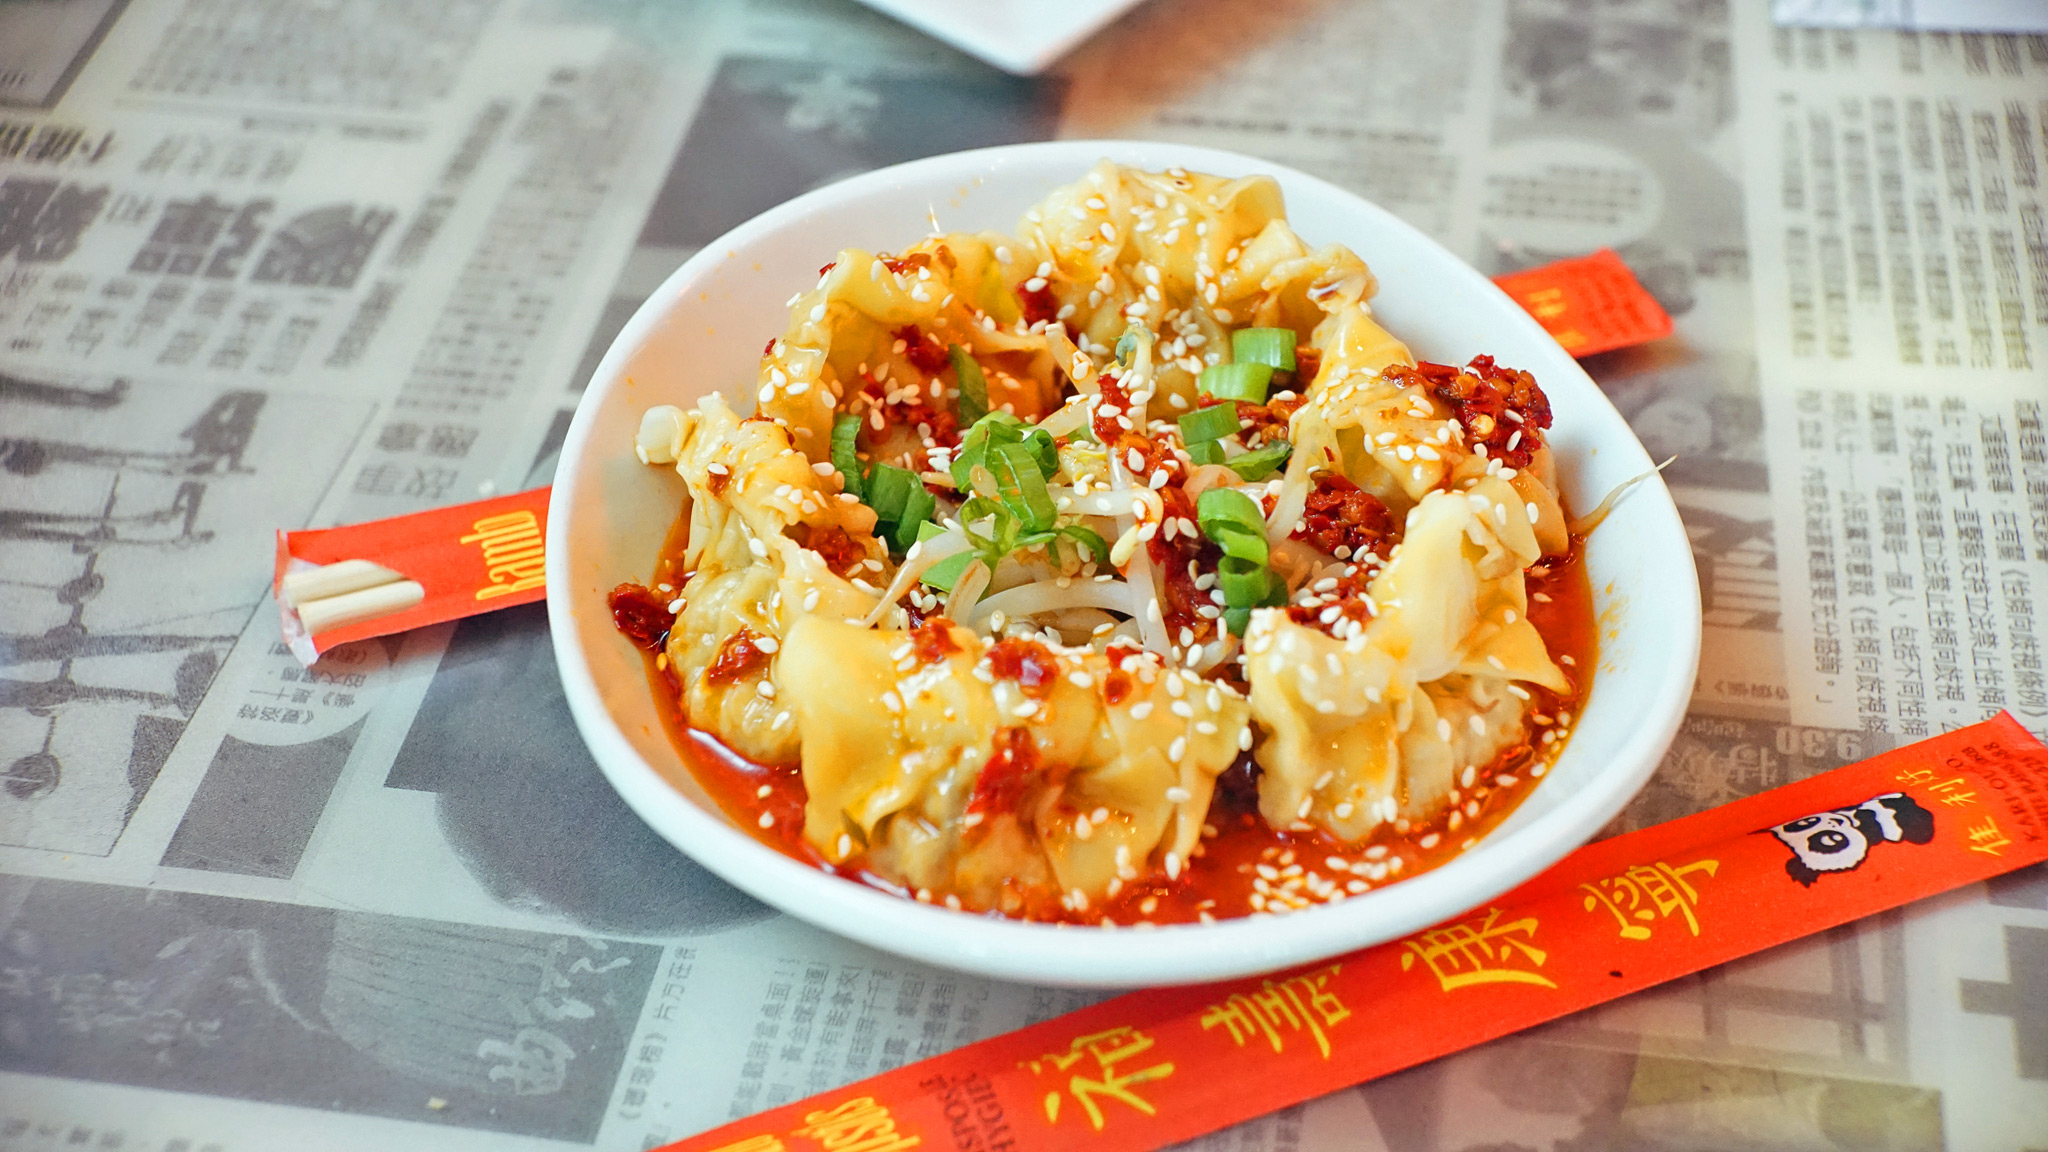 Sichuan Wontons - chicken, shrimp, peanut chili sauce